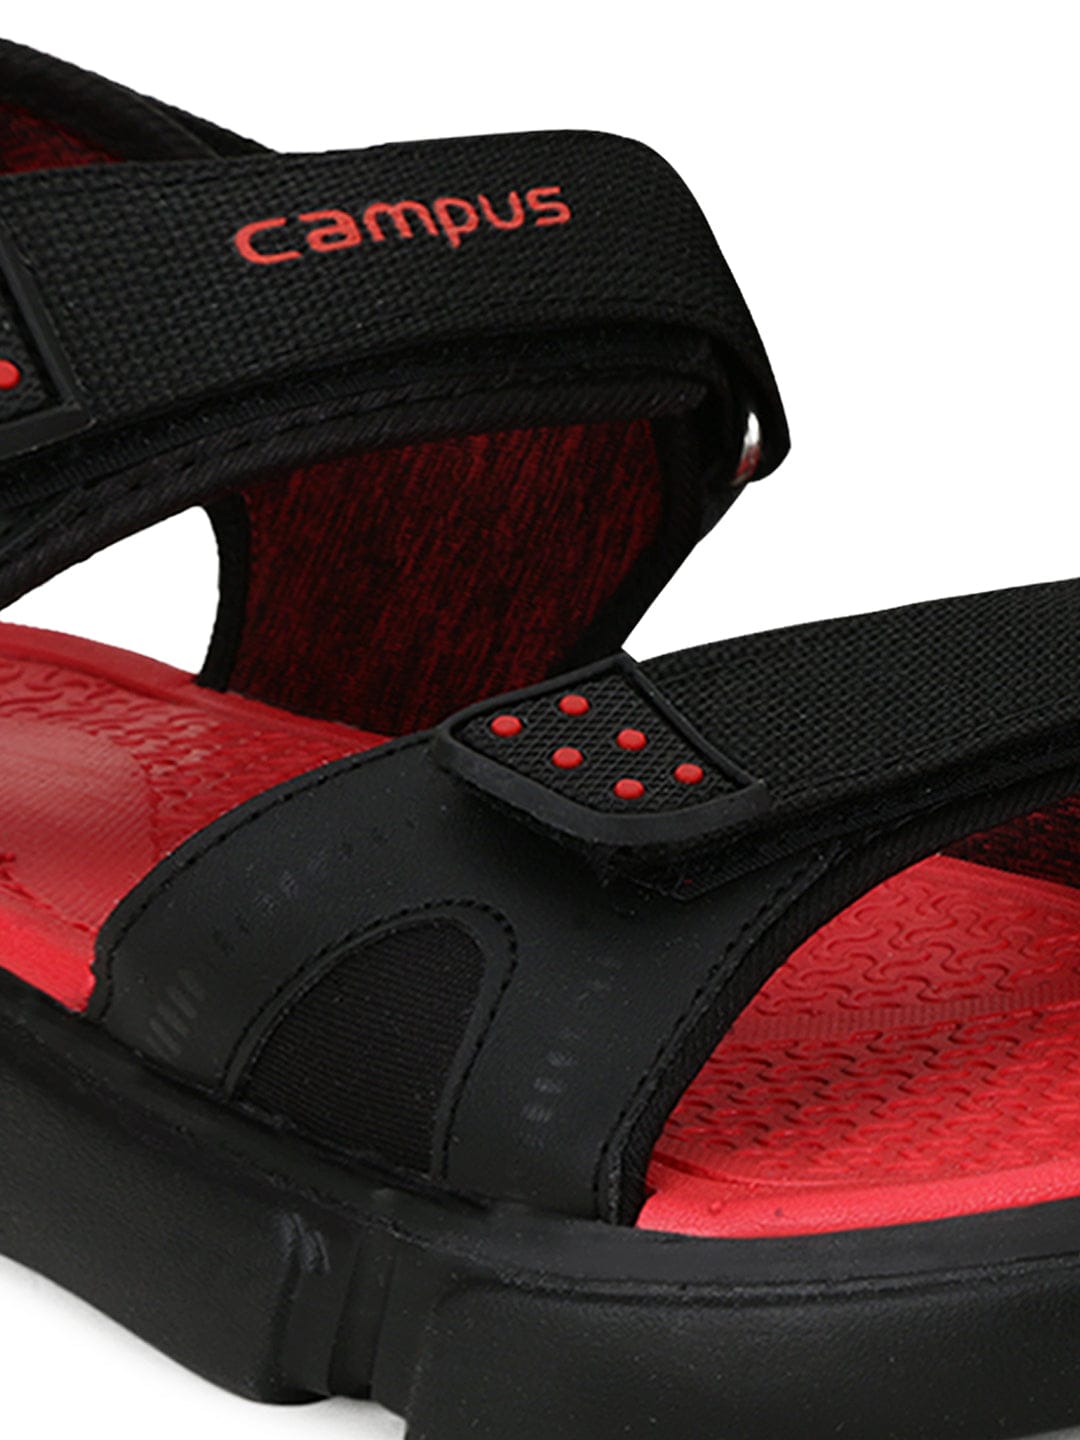 Buy Sandals For Men: 2Gc-1-Rust-Beige | Campus Shoes